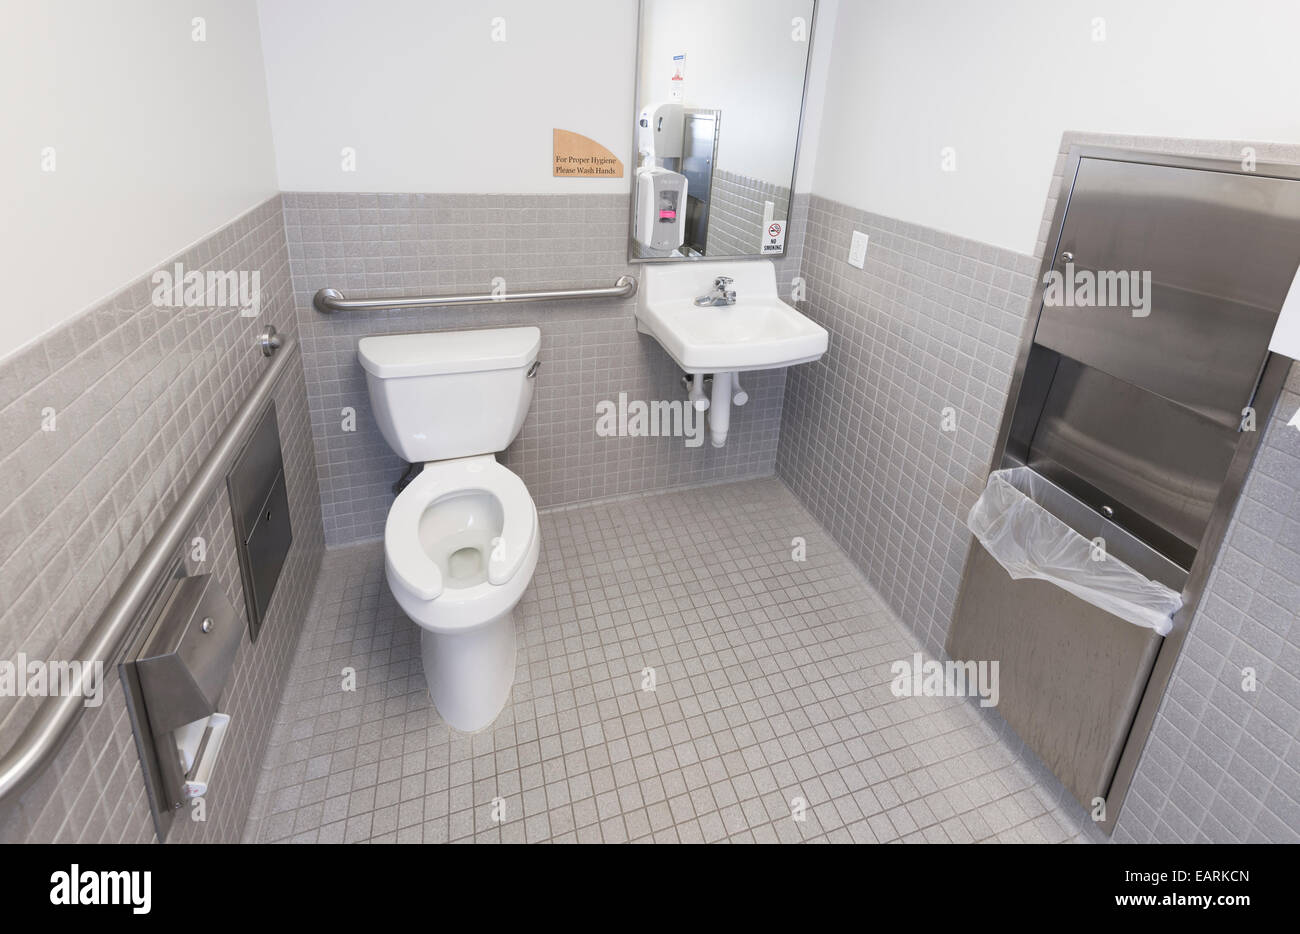 Toilet In Public Bathroom Stock Photo